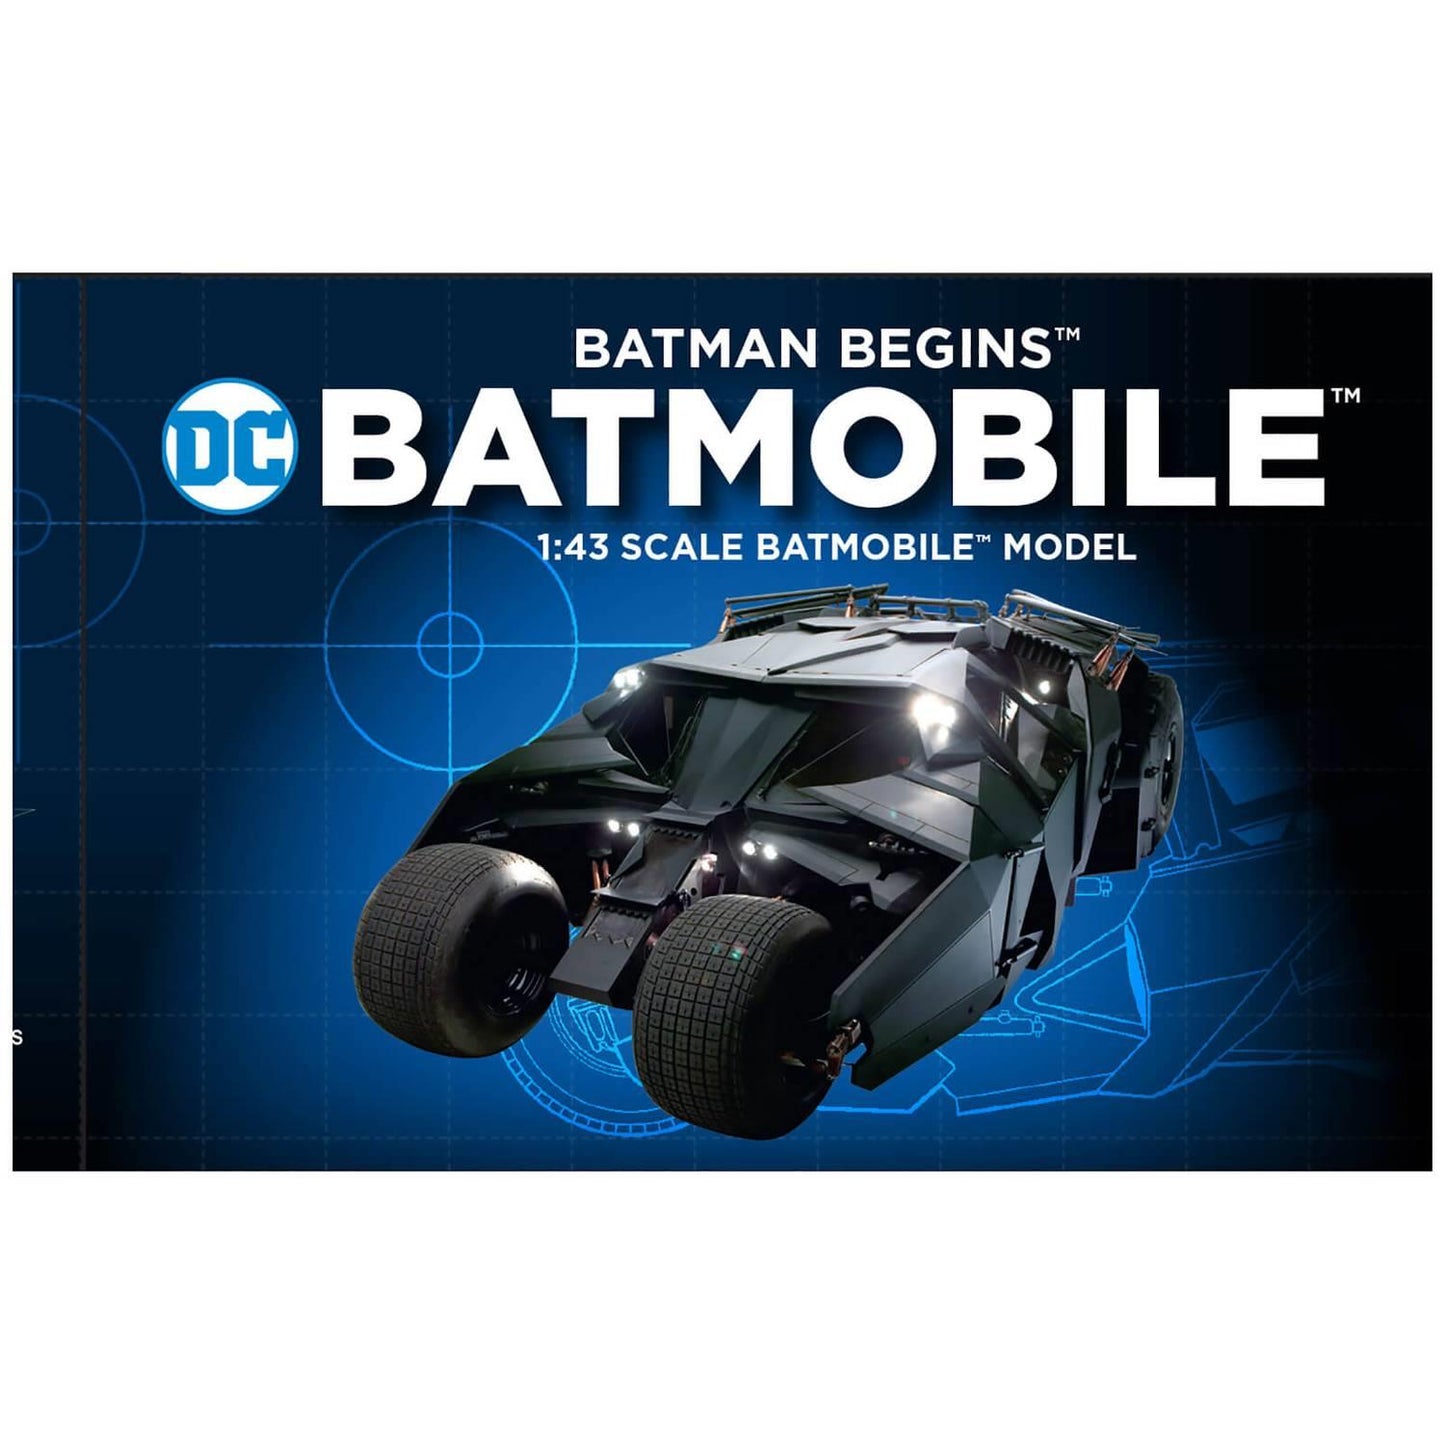 Batman Begins BATMOBILE 1:43 Scale Model MBAEN004 Hero Collector Die-cast Model